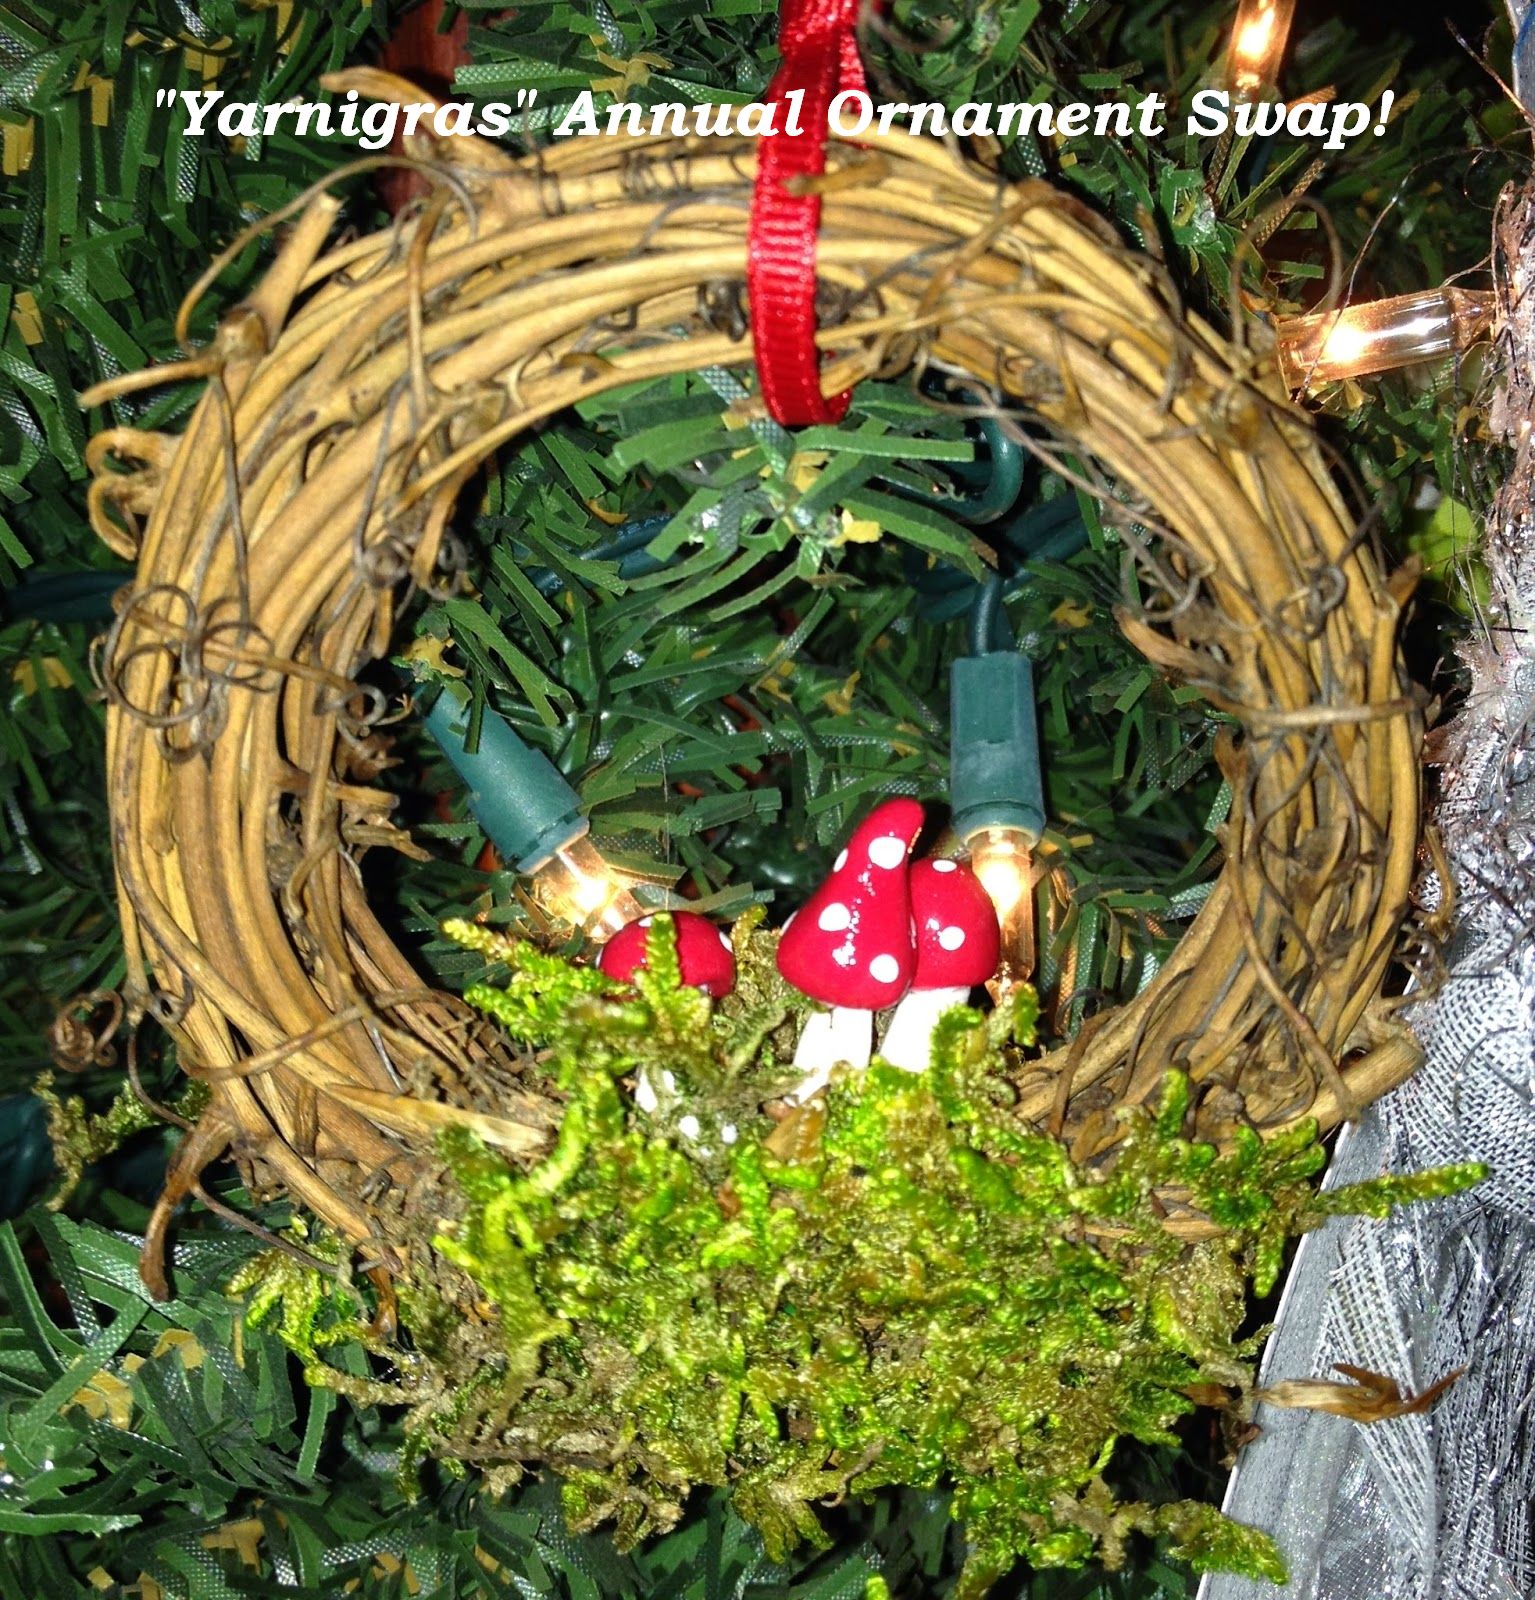 Yarnigras! Annual Ornament Swap